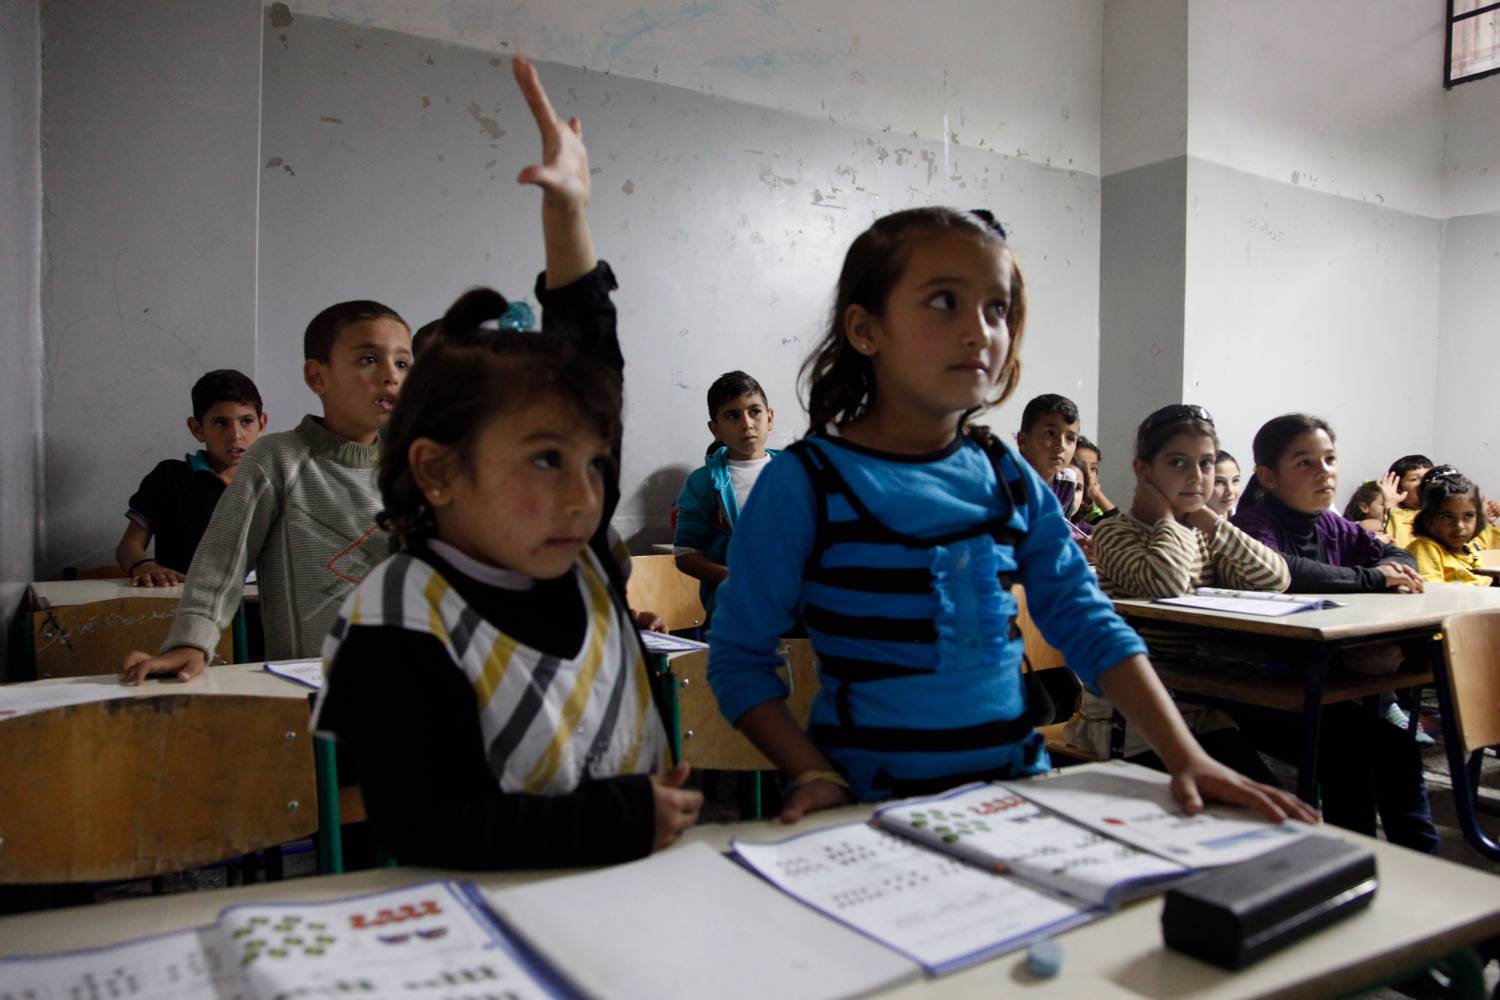 Syrian refugee children in a Lebanese school classroom. Photo: Russell Watkins / Department for International Development / CC BY-SA 2.0